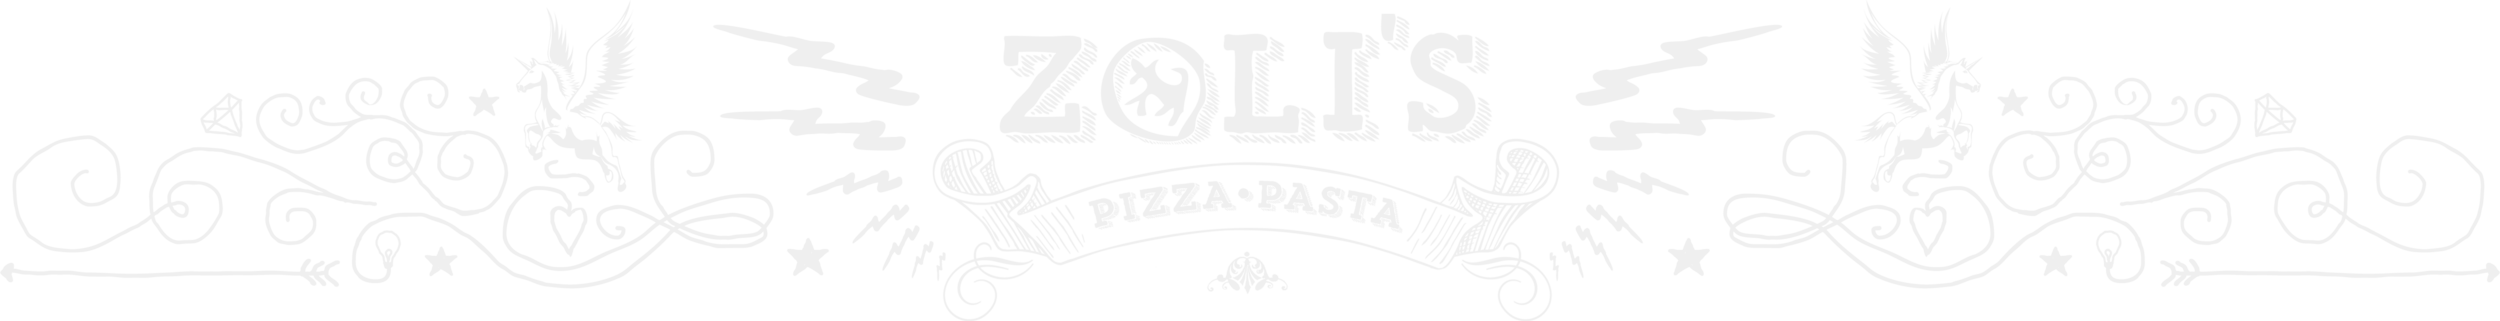 Zoli的披萨盒Logo_full_white.png